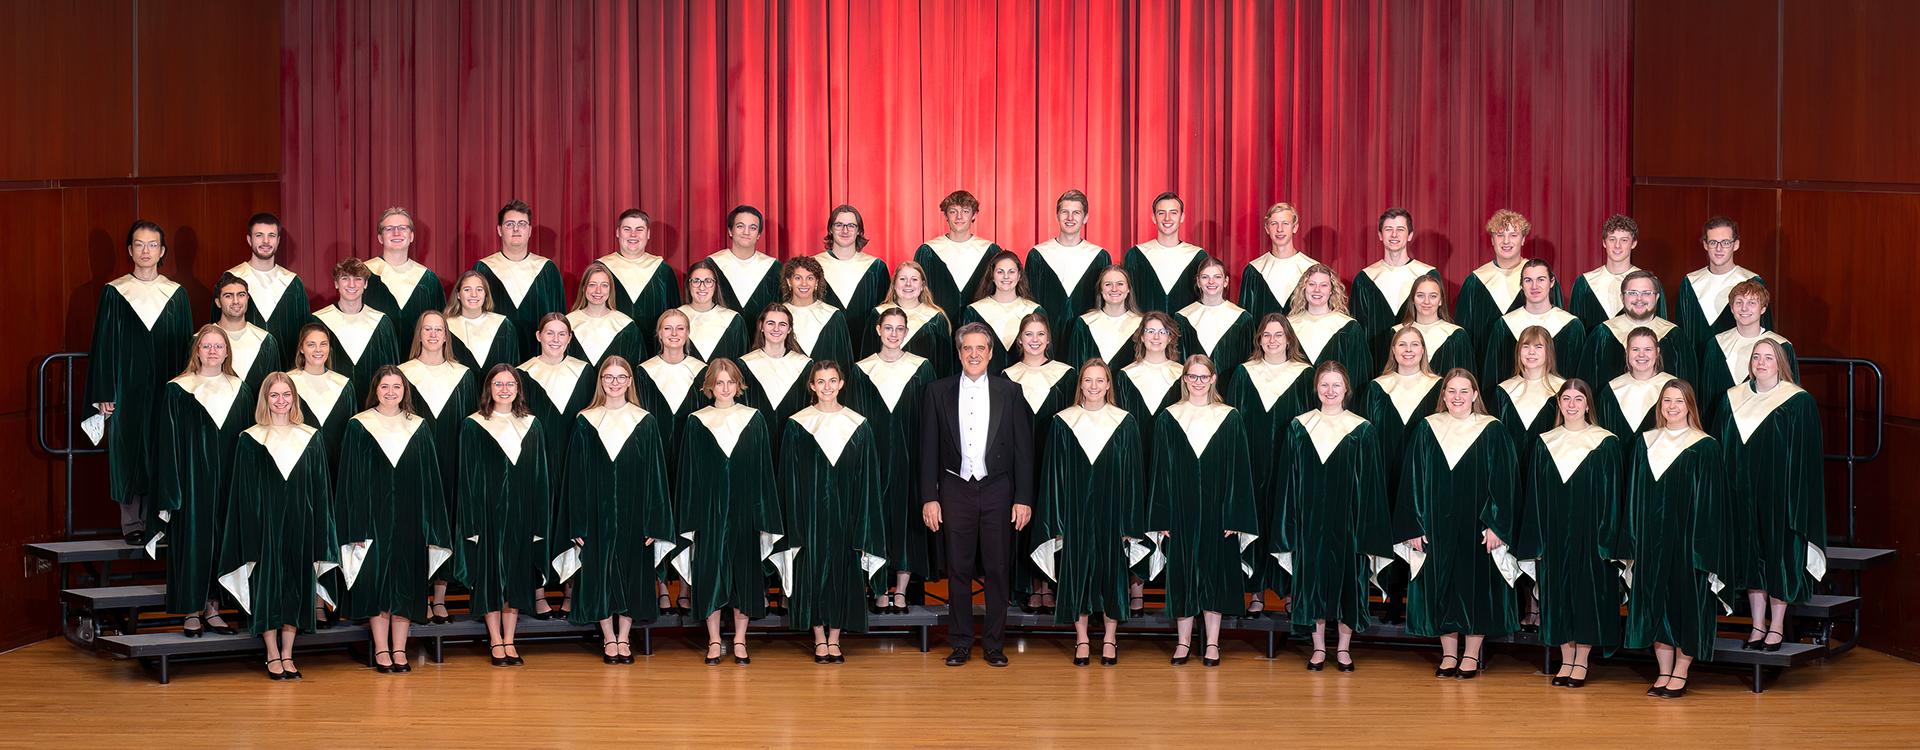 Choir group photo